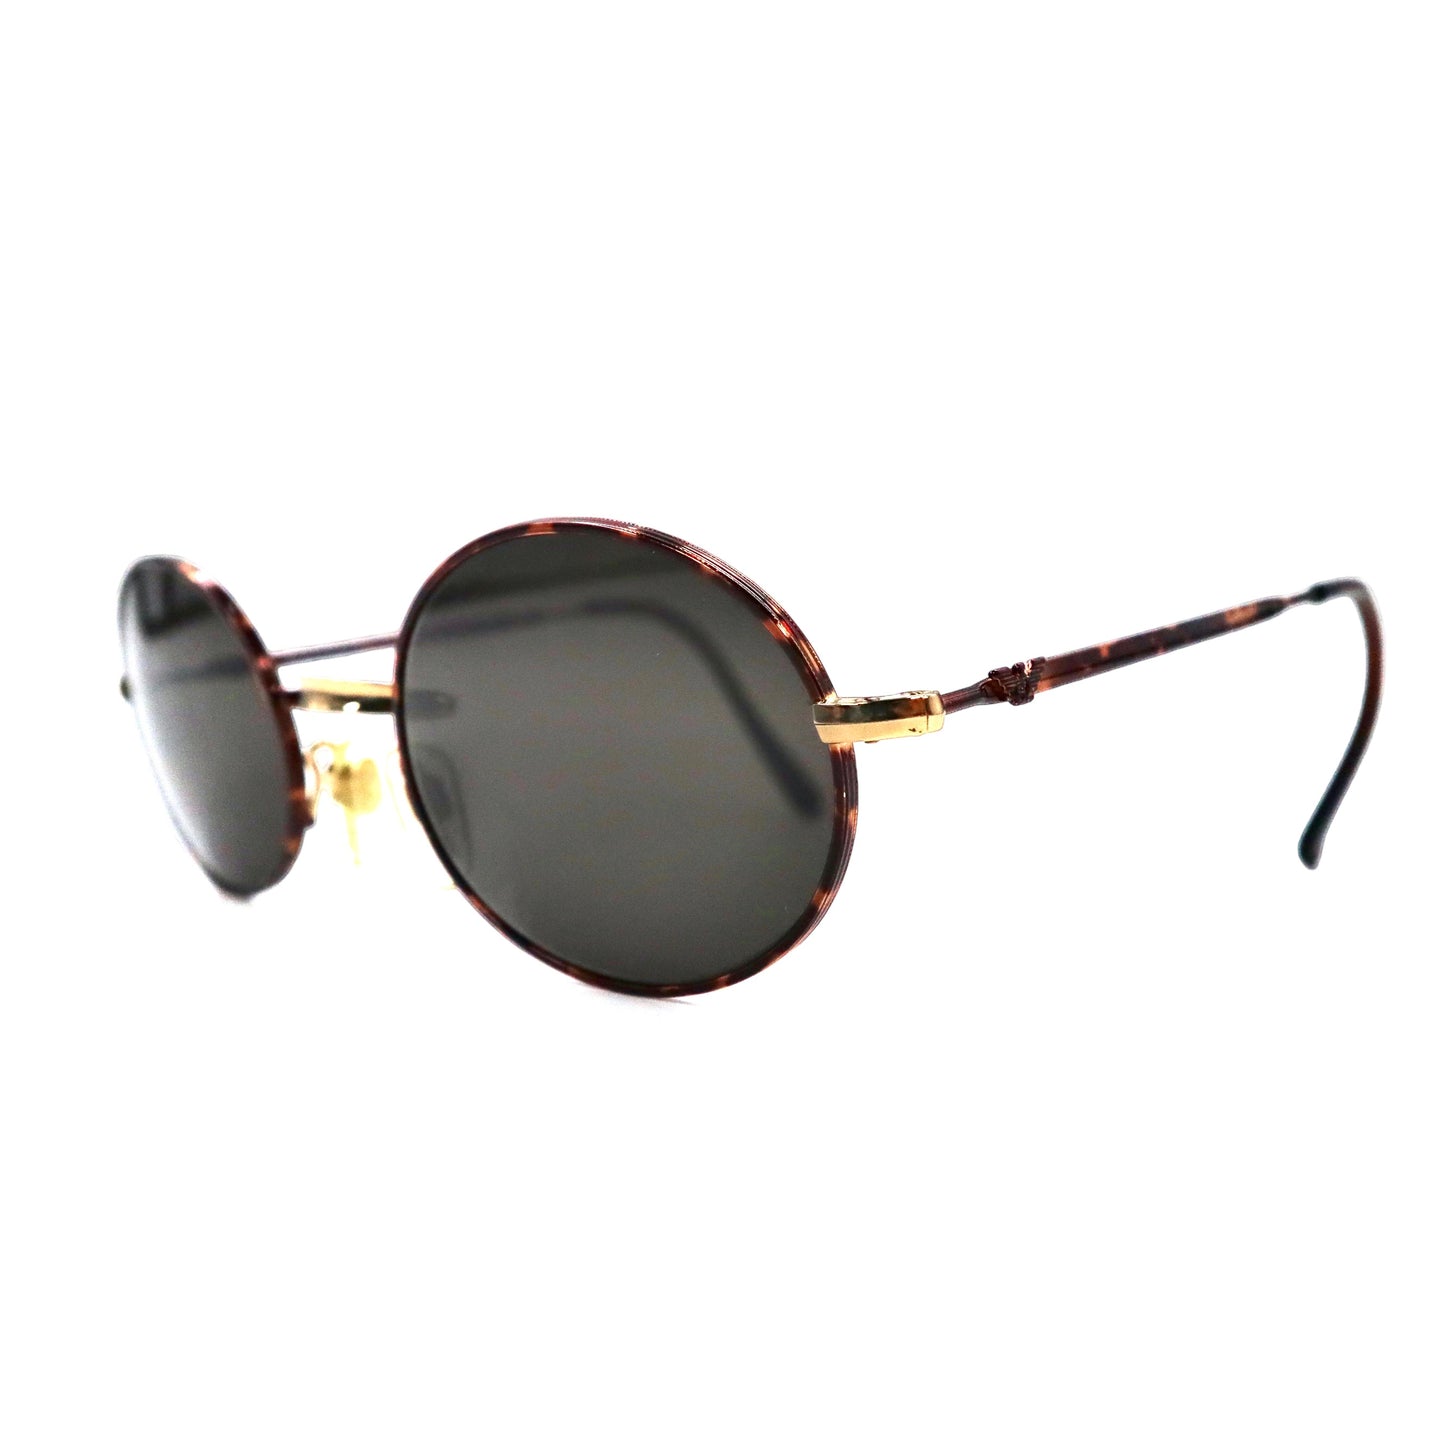 EMPORIO ARMANI Sunglasses Oval Beckou 002 721 140 Italian Made ...